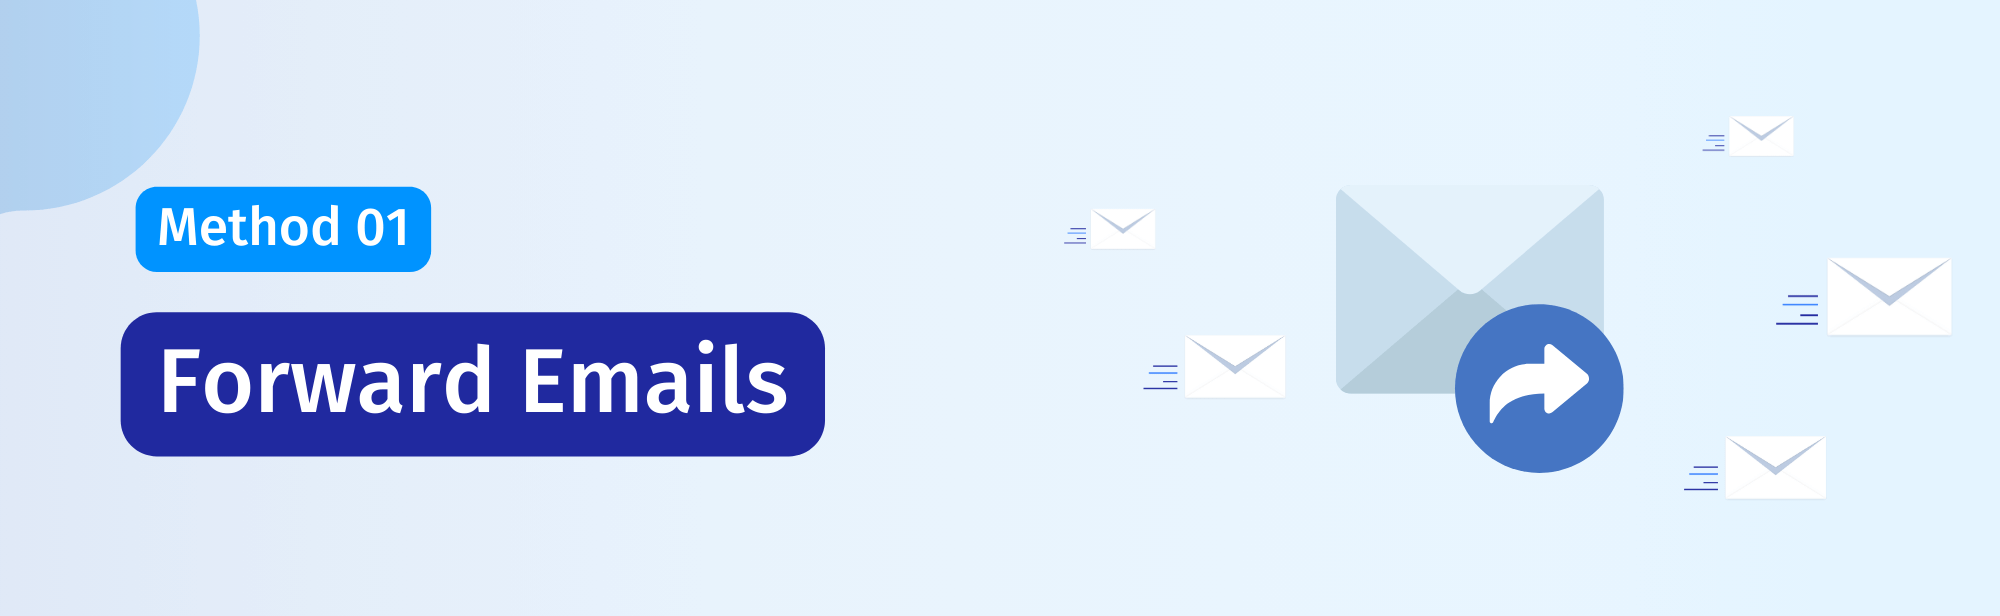 import mails: forward emails